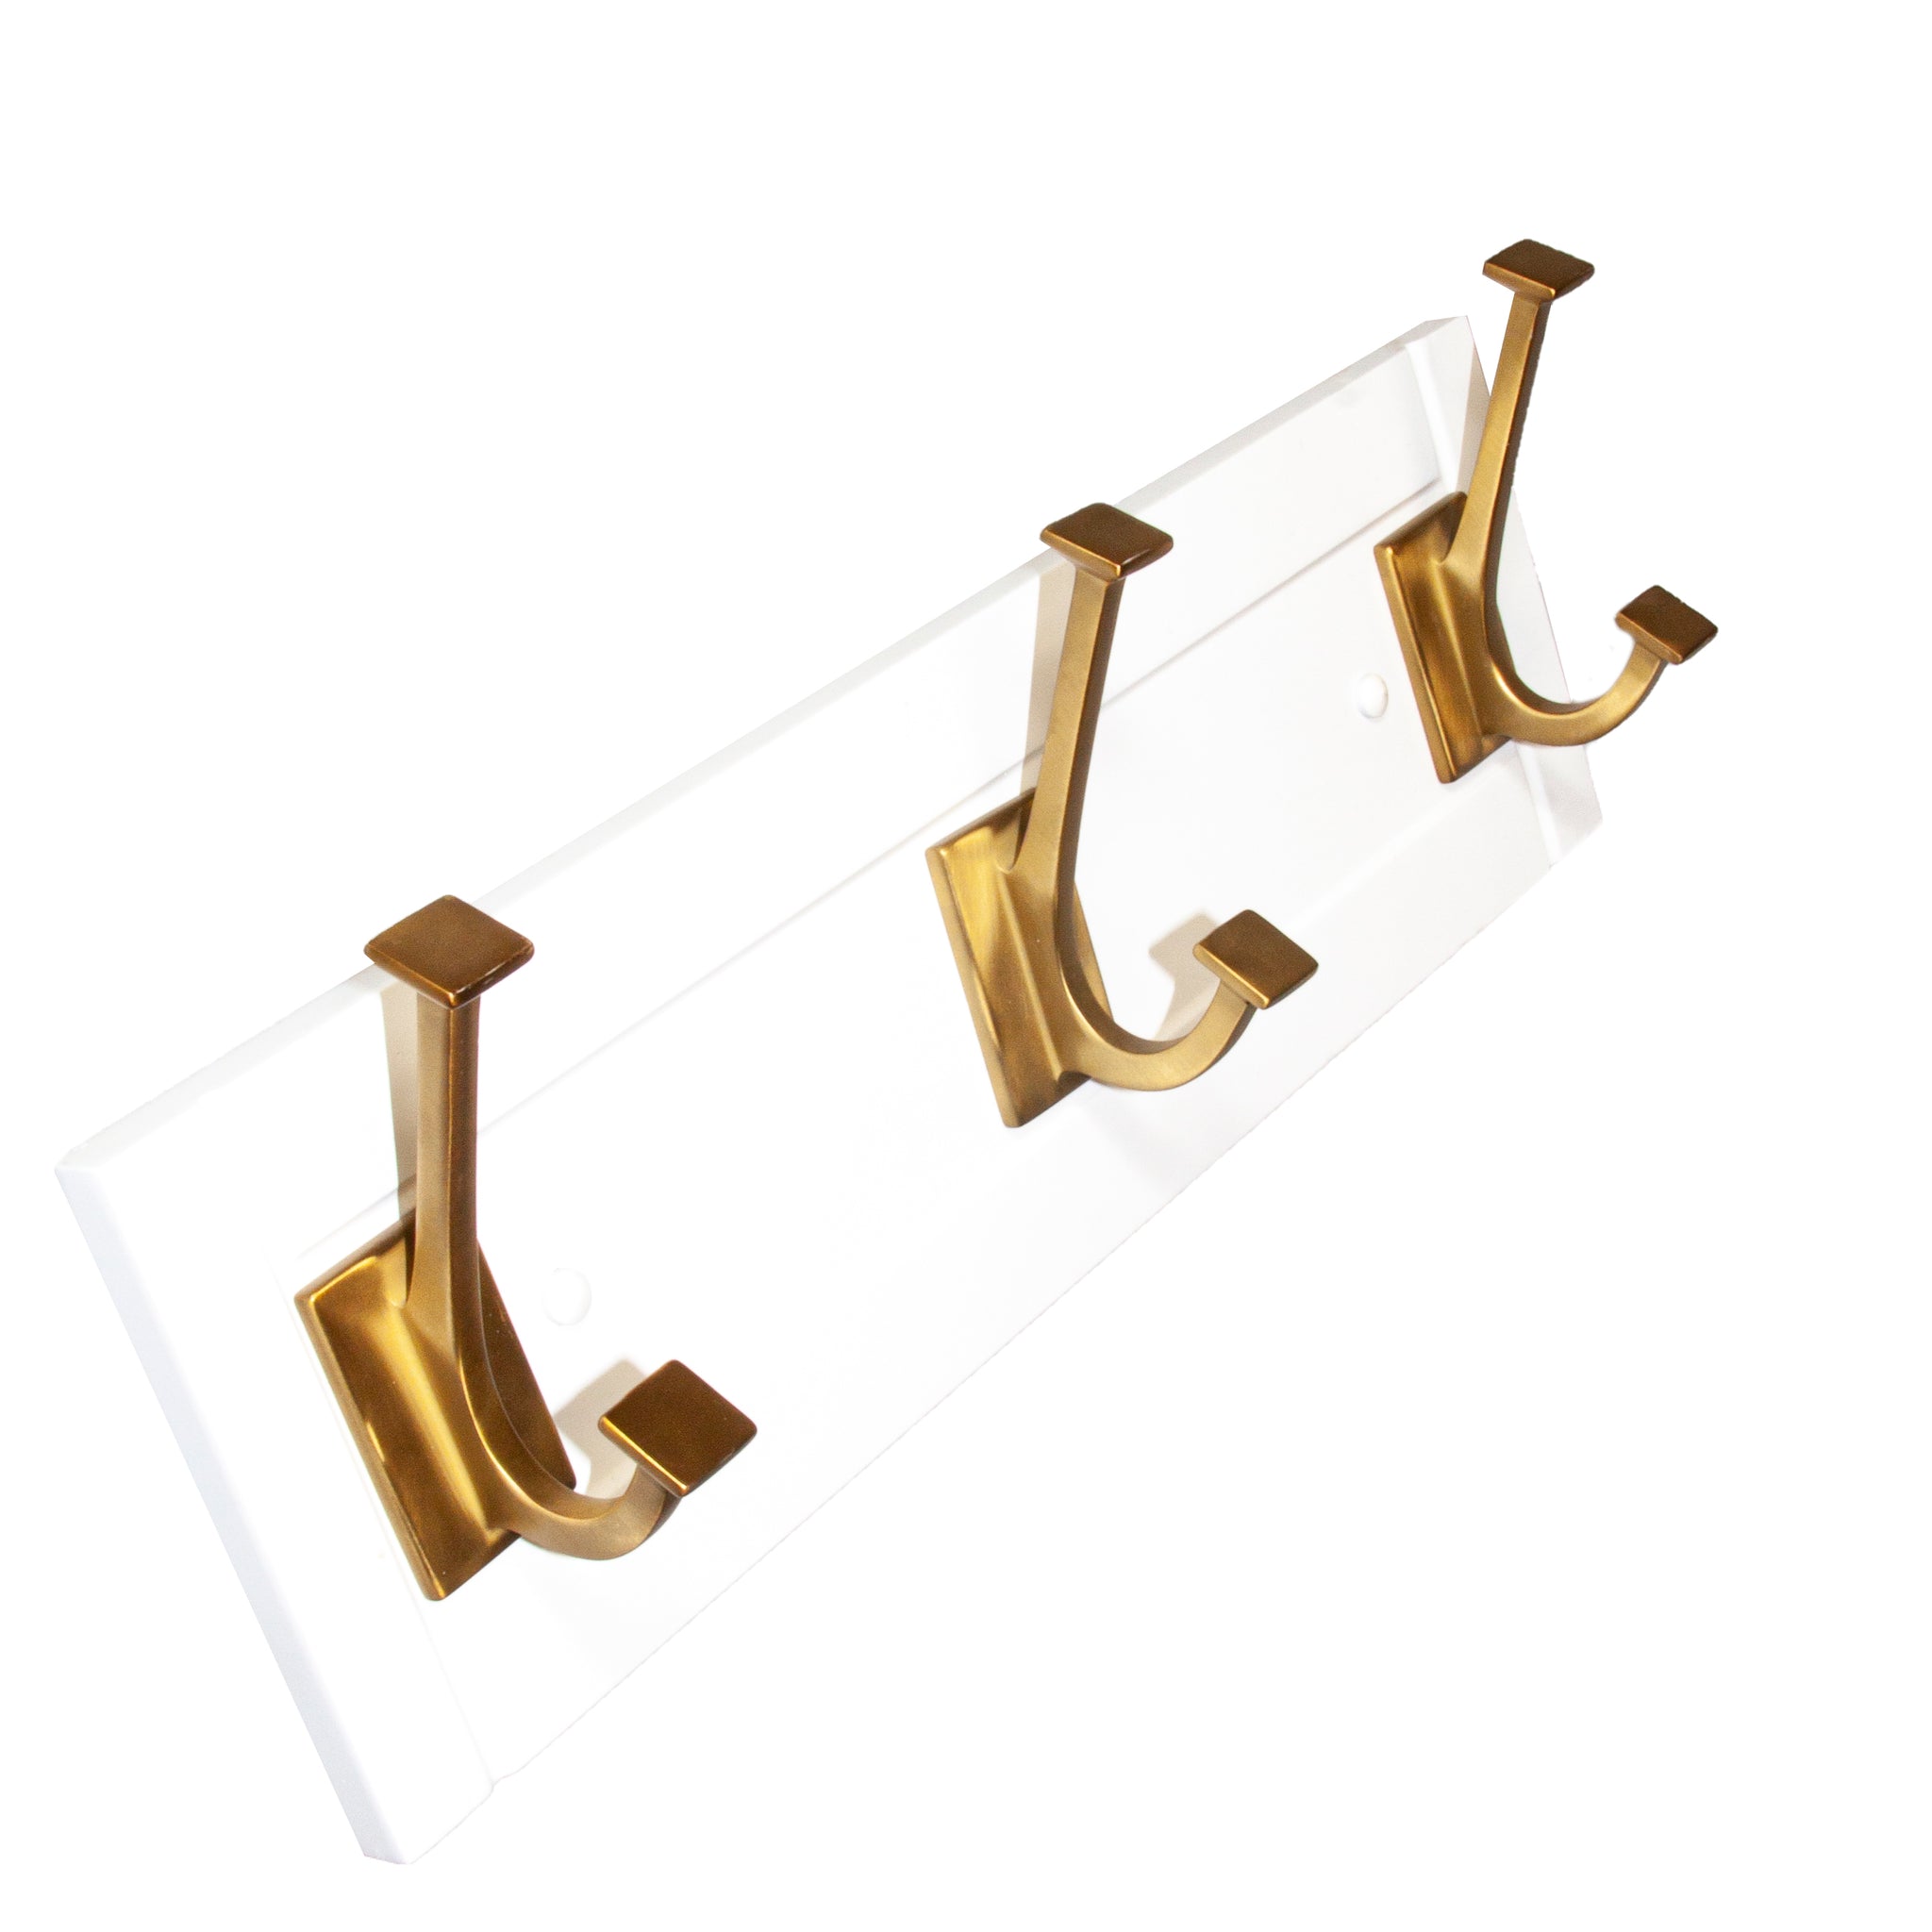 3 Coat & Hat Hook Rail 17-1/2 Inch Long in Brushed Golden Brass - Hickory Hardware